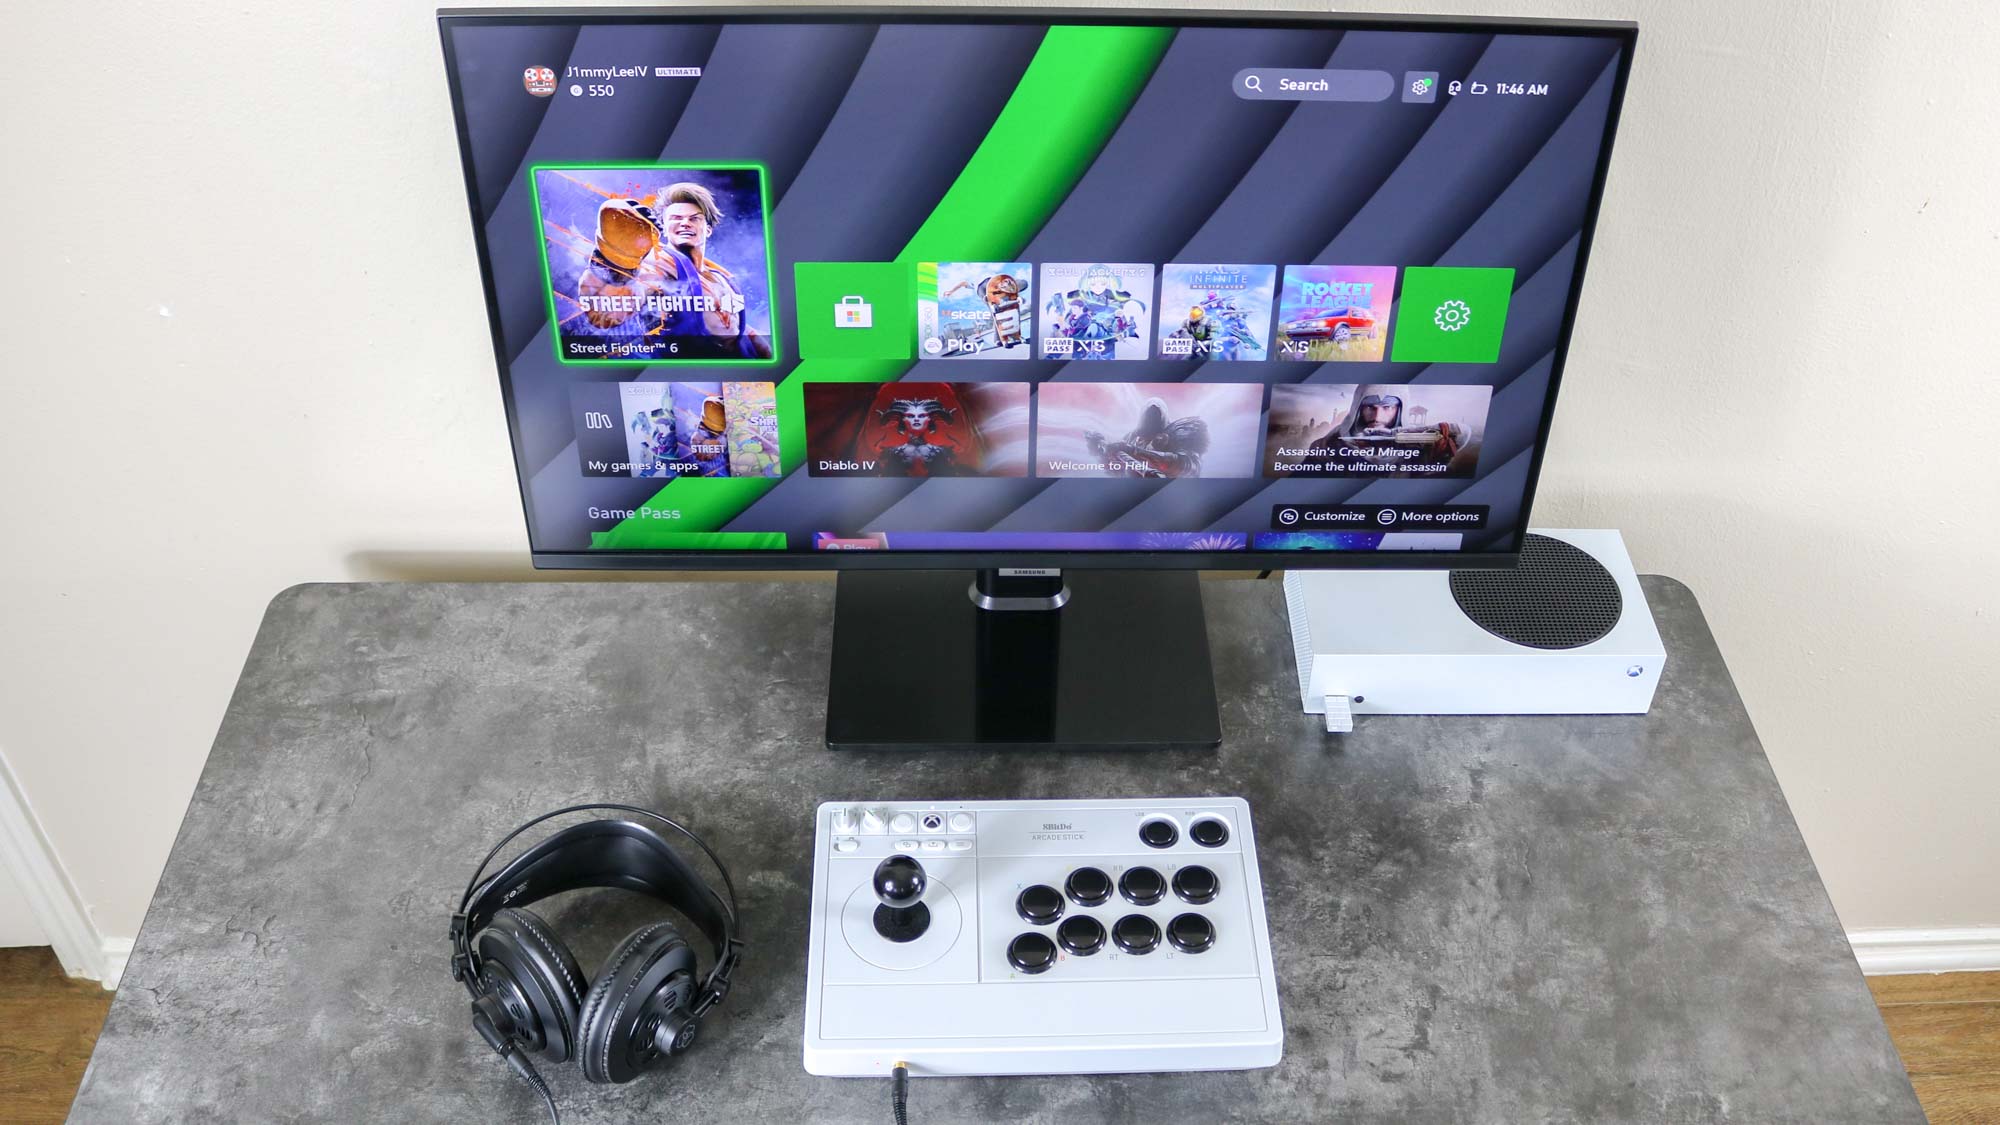 8BitDo's Xbox-licensed arcade stick is wireless and customizable